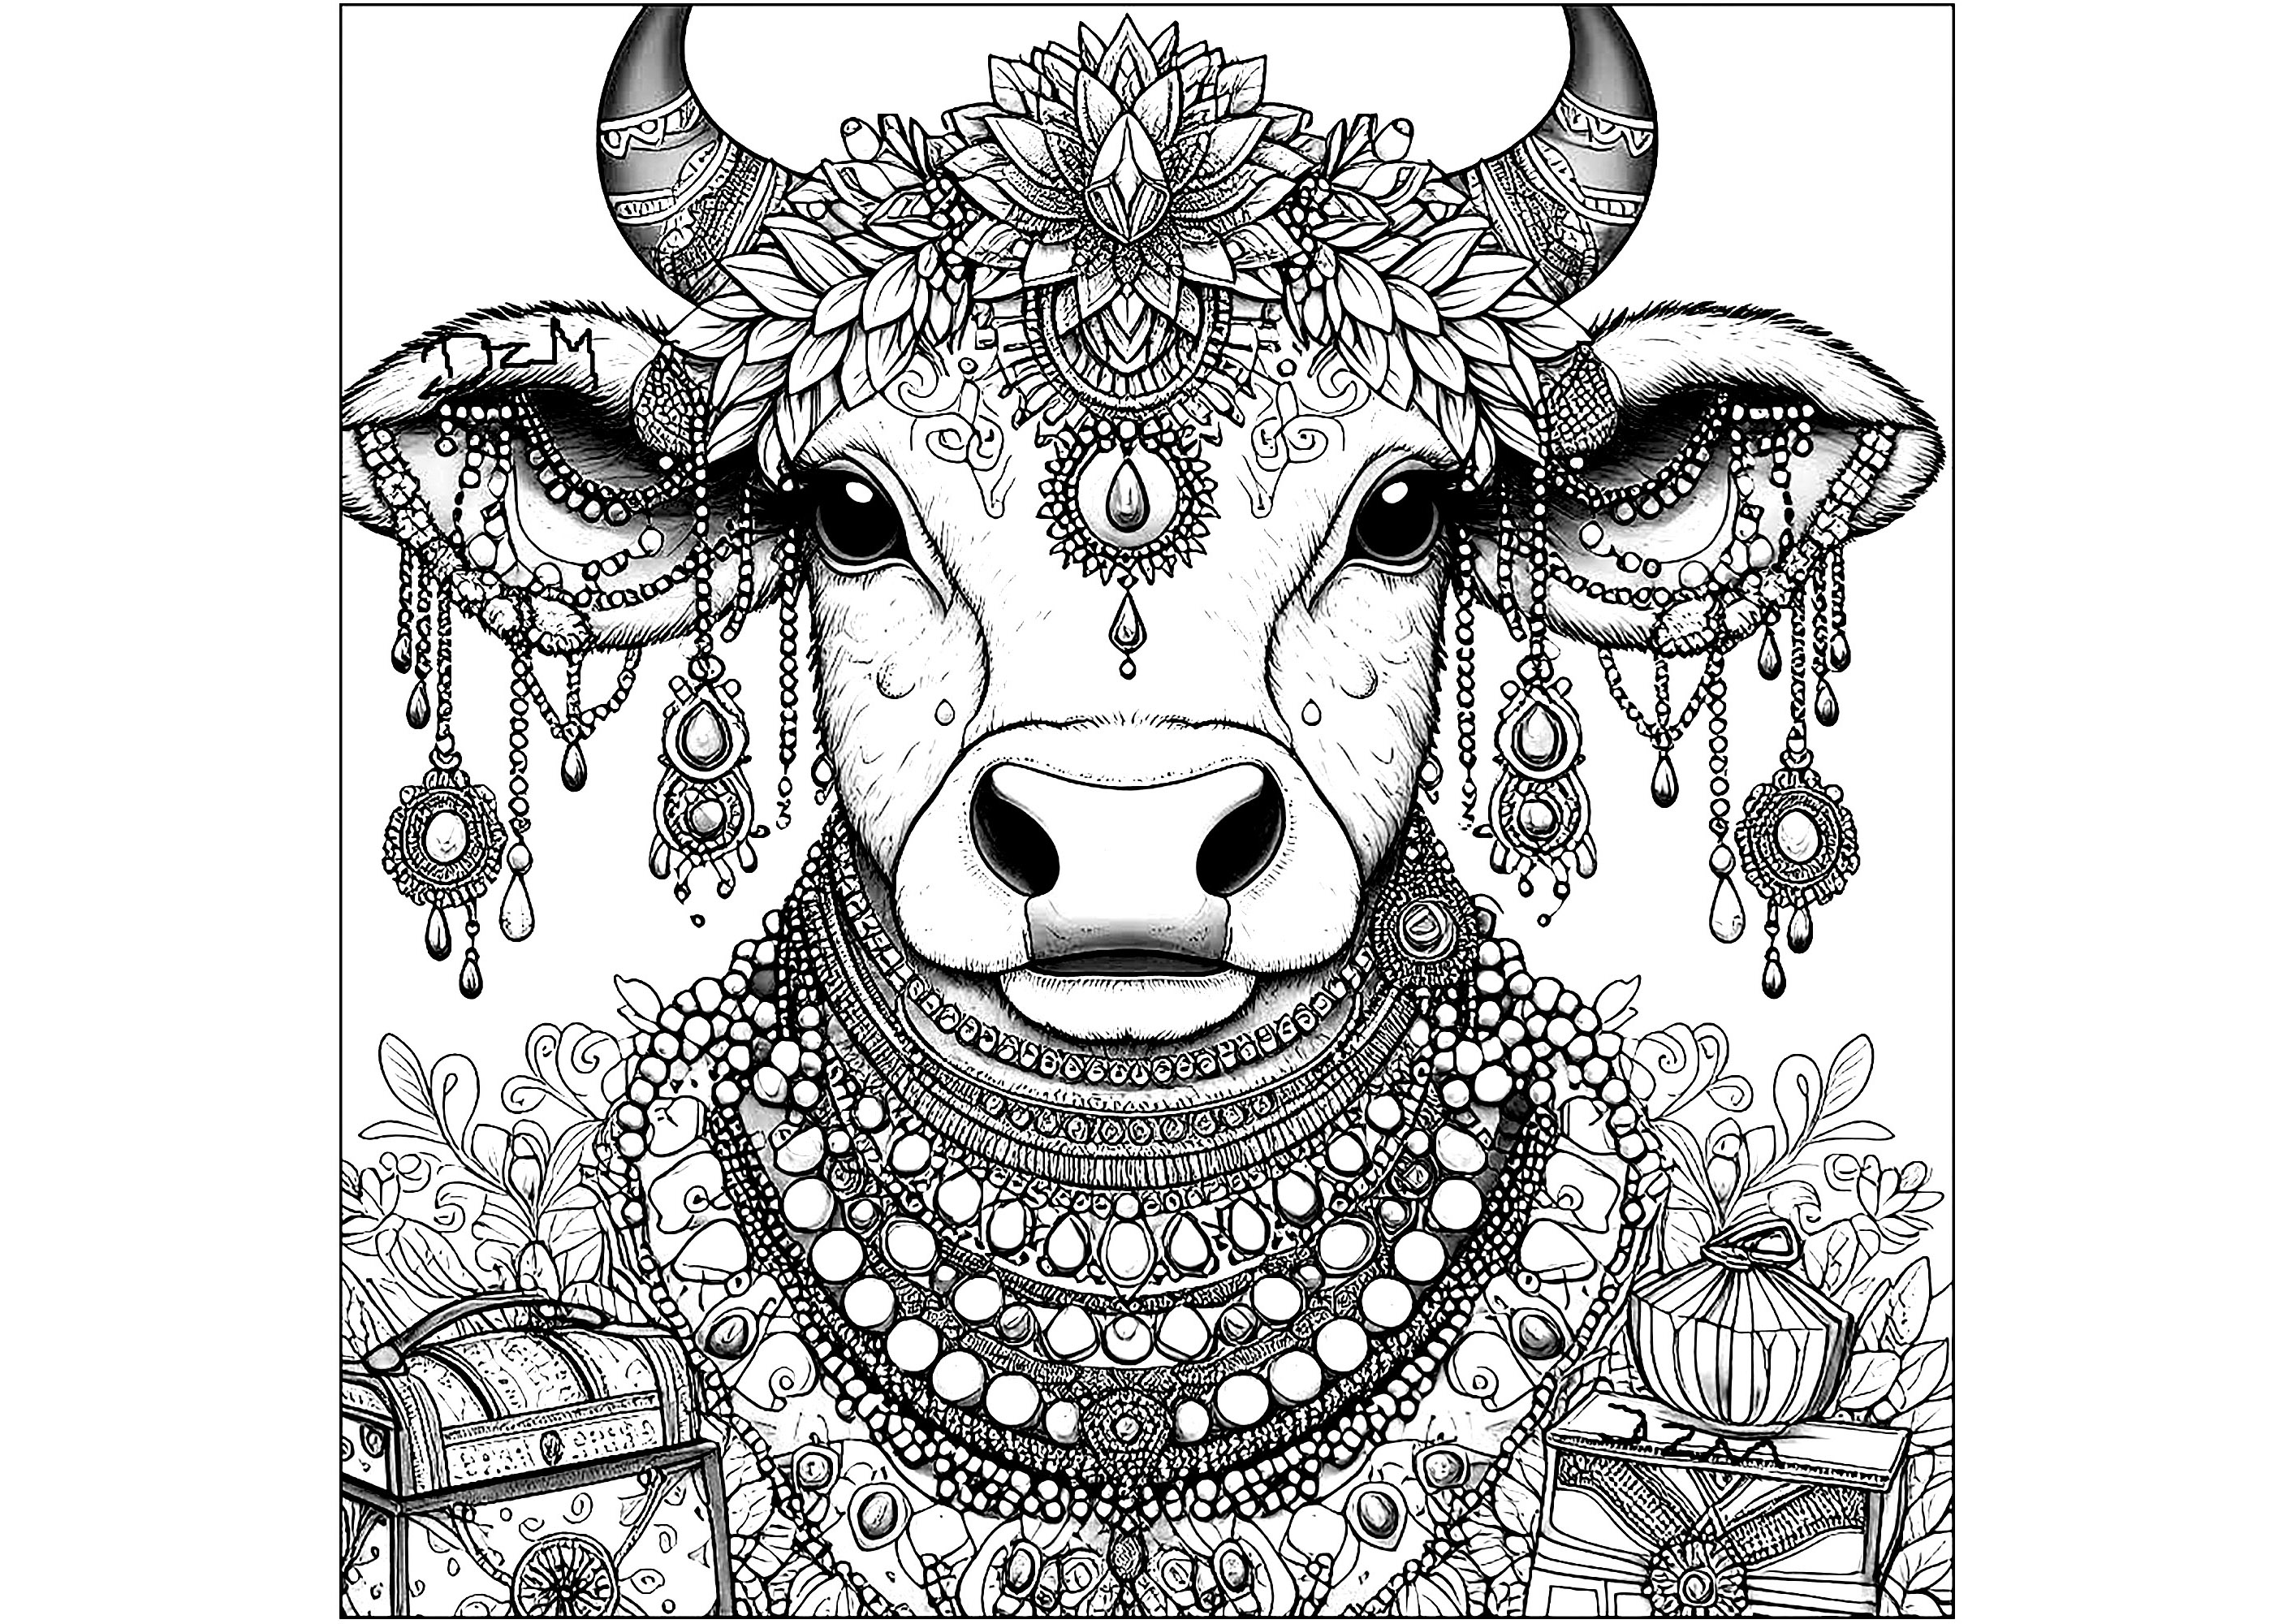 Kuh mit hübschen Juwelen, Künstler : Domandalas